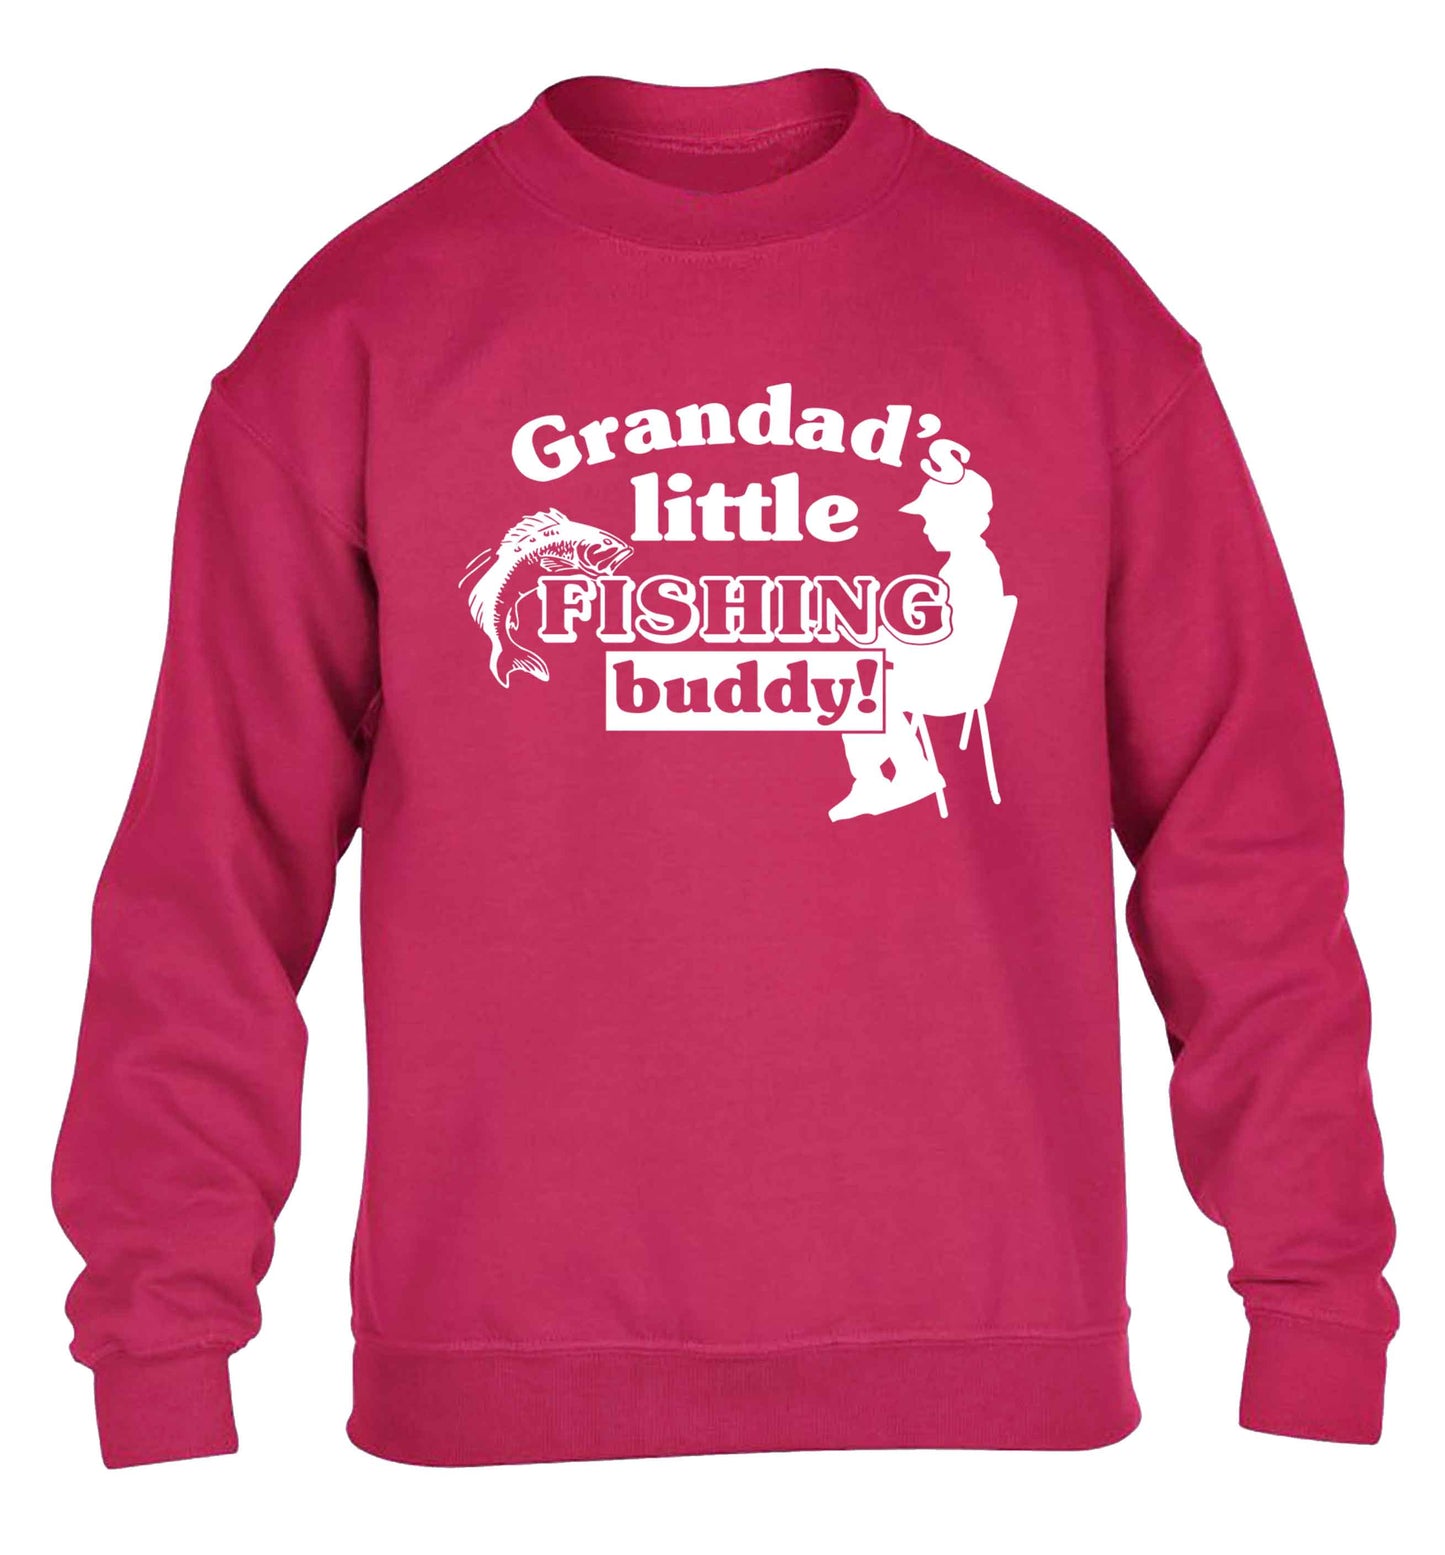 Grandad's little fishing buddy! children's pink sweater 12-13 Years